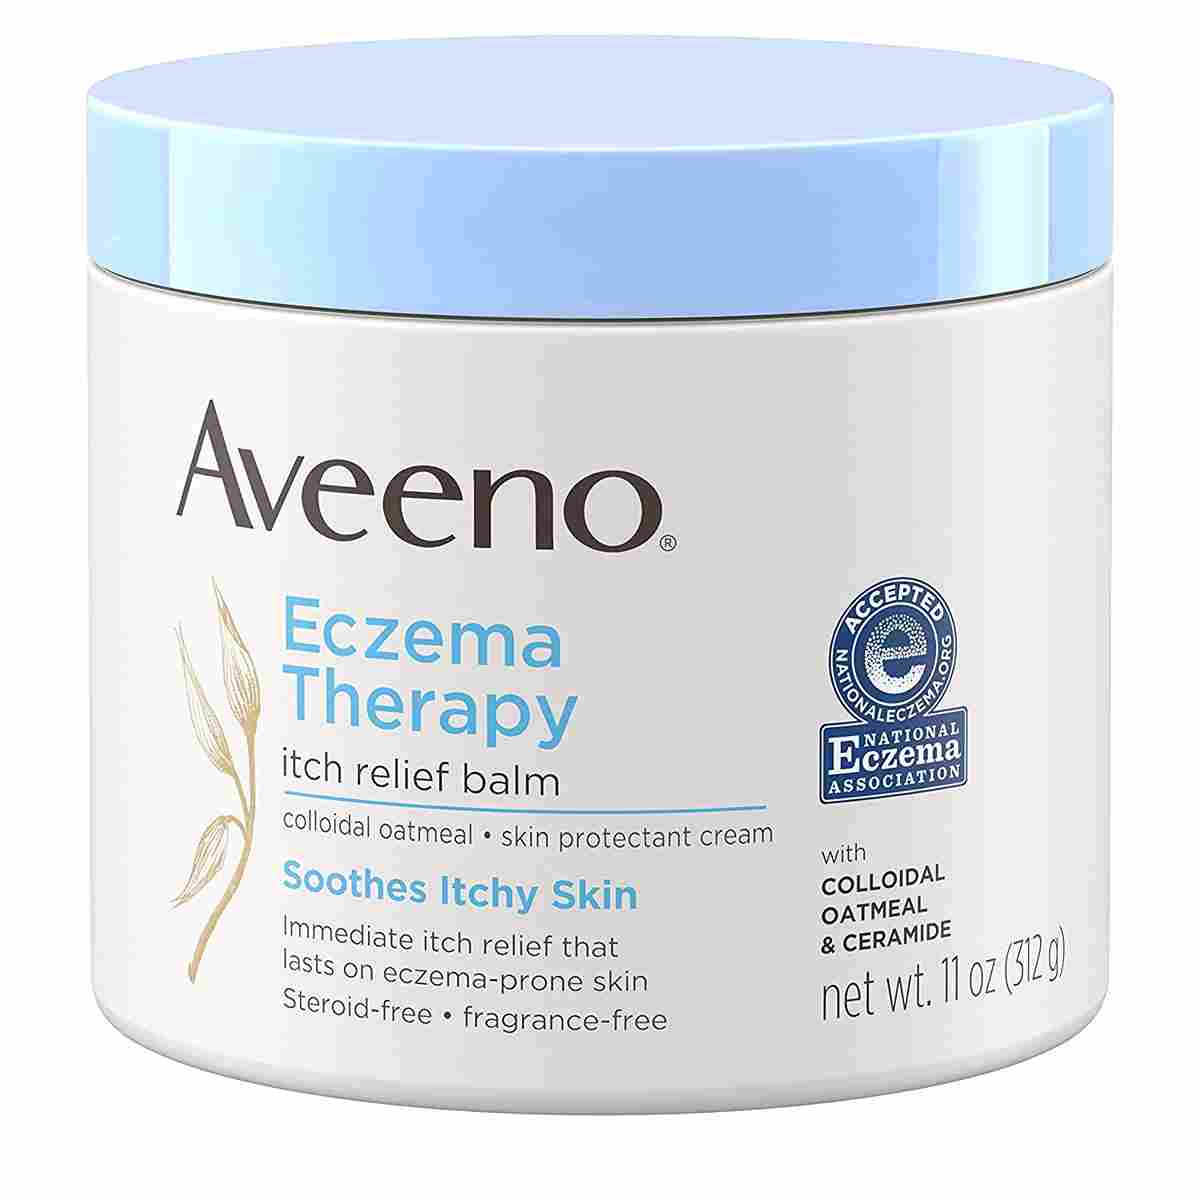 Aveeno Eczema Therapy Itch Relief Balm promo code.